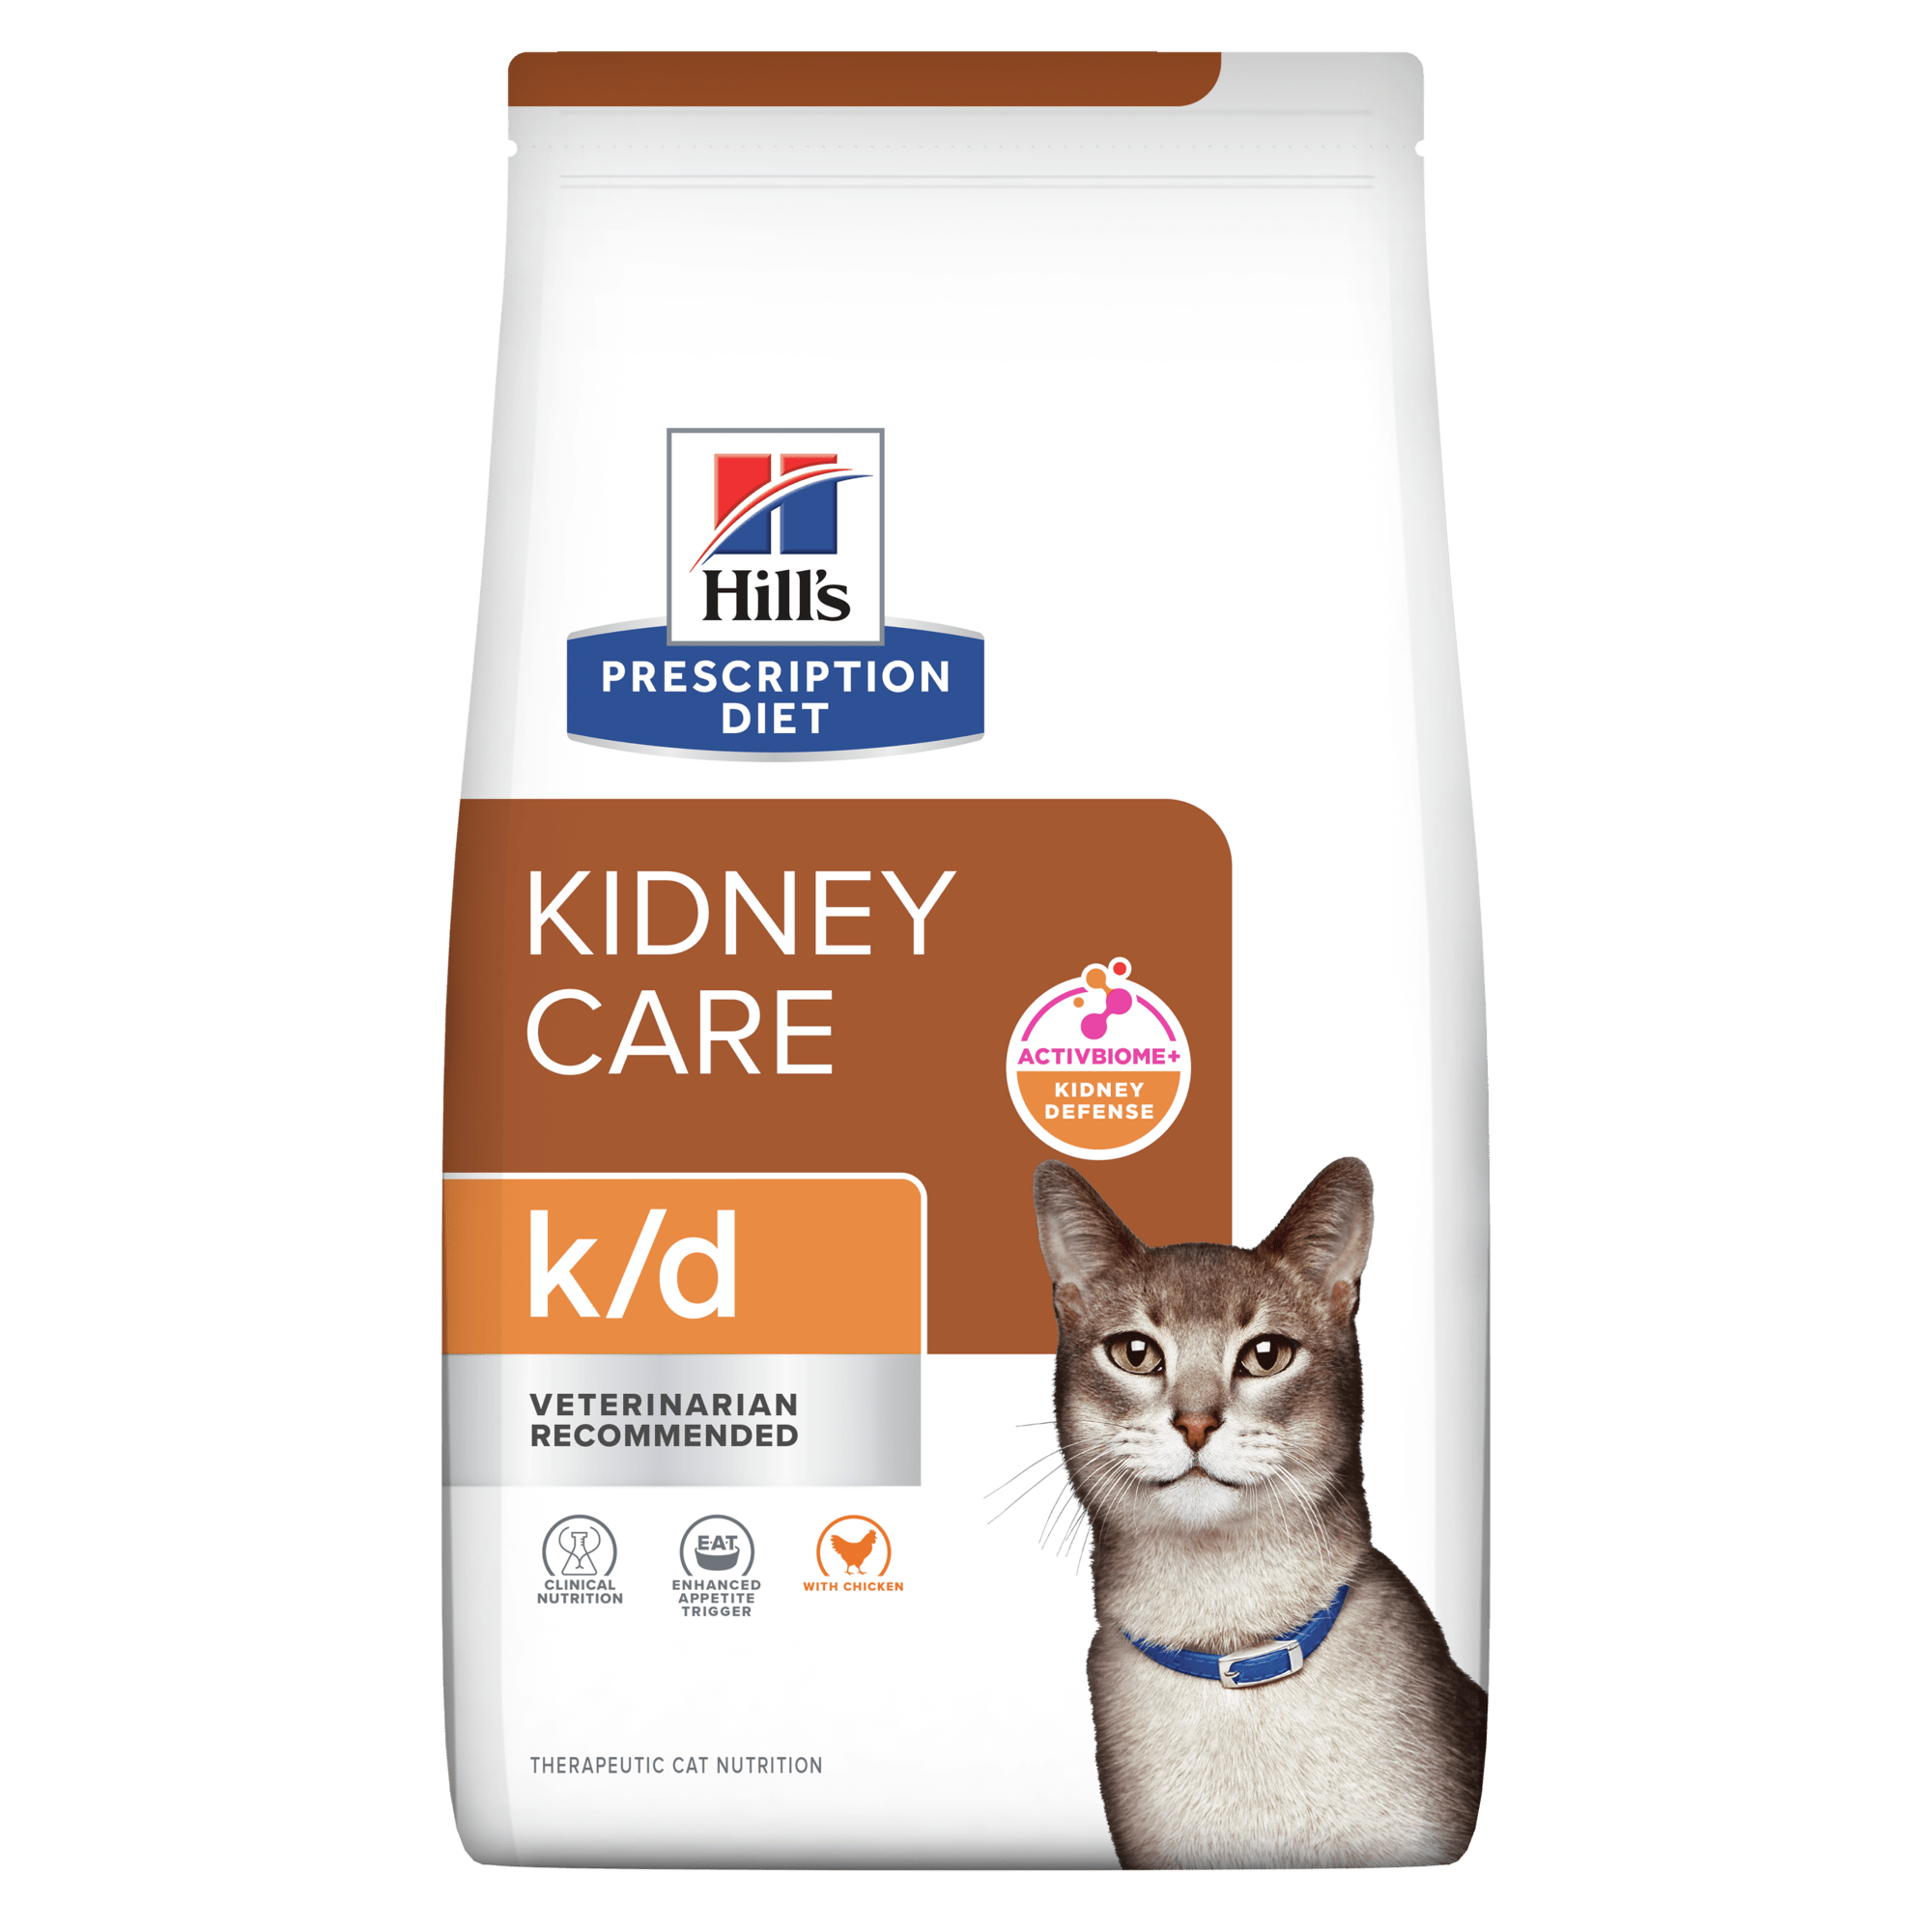 hills kidney care dry cat food